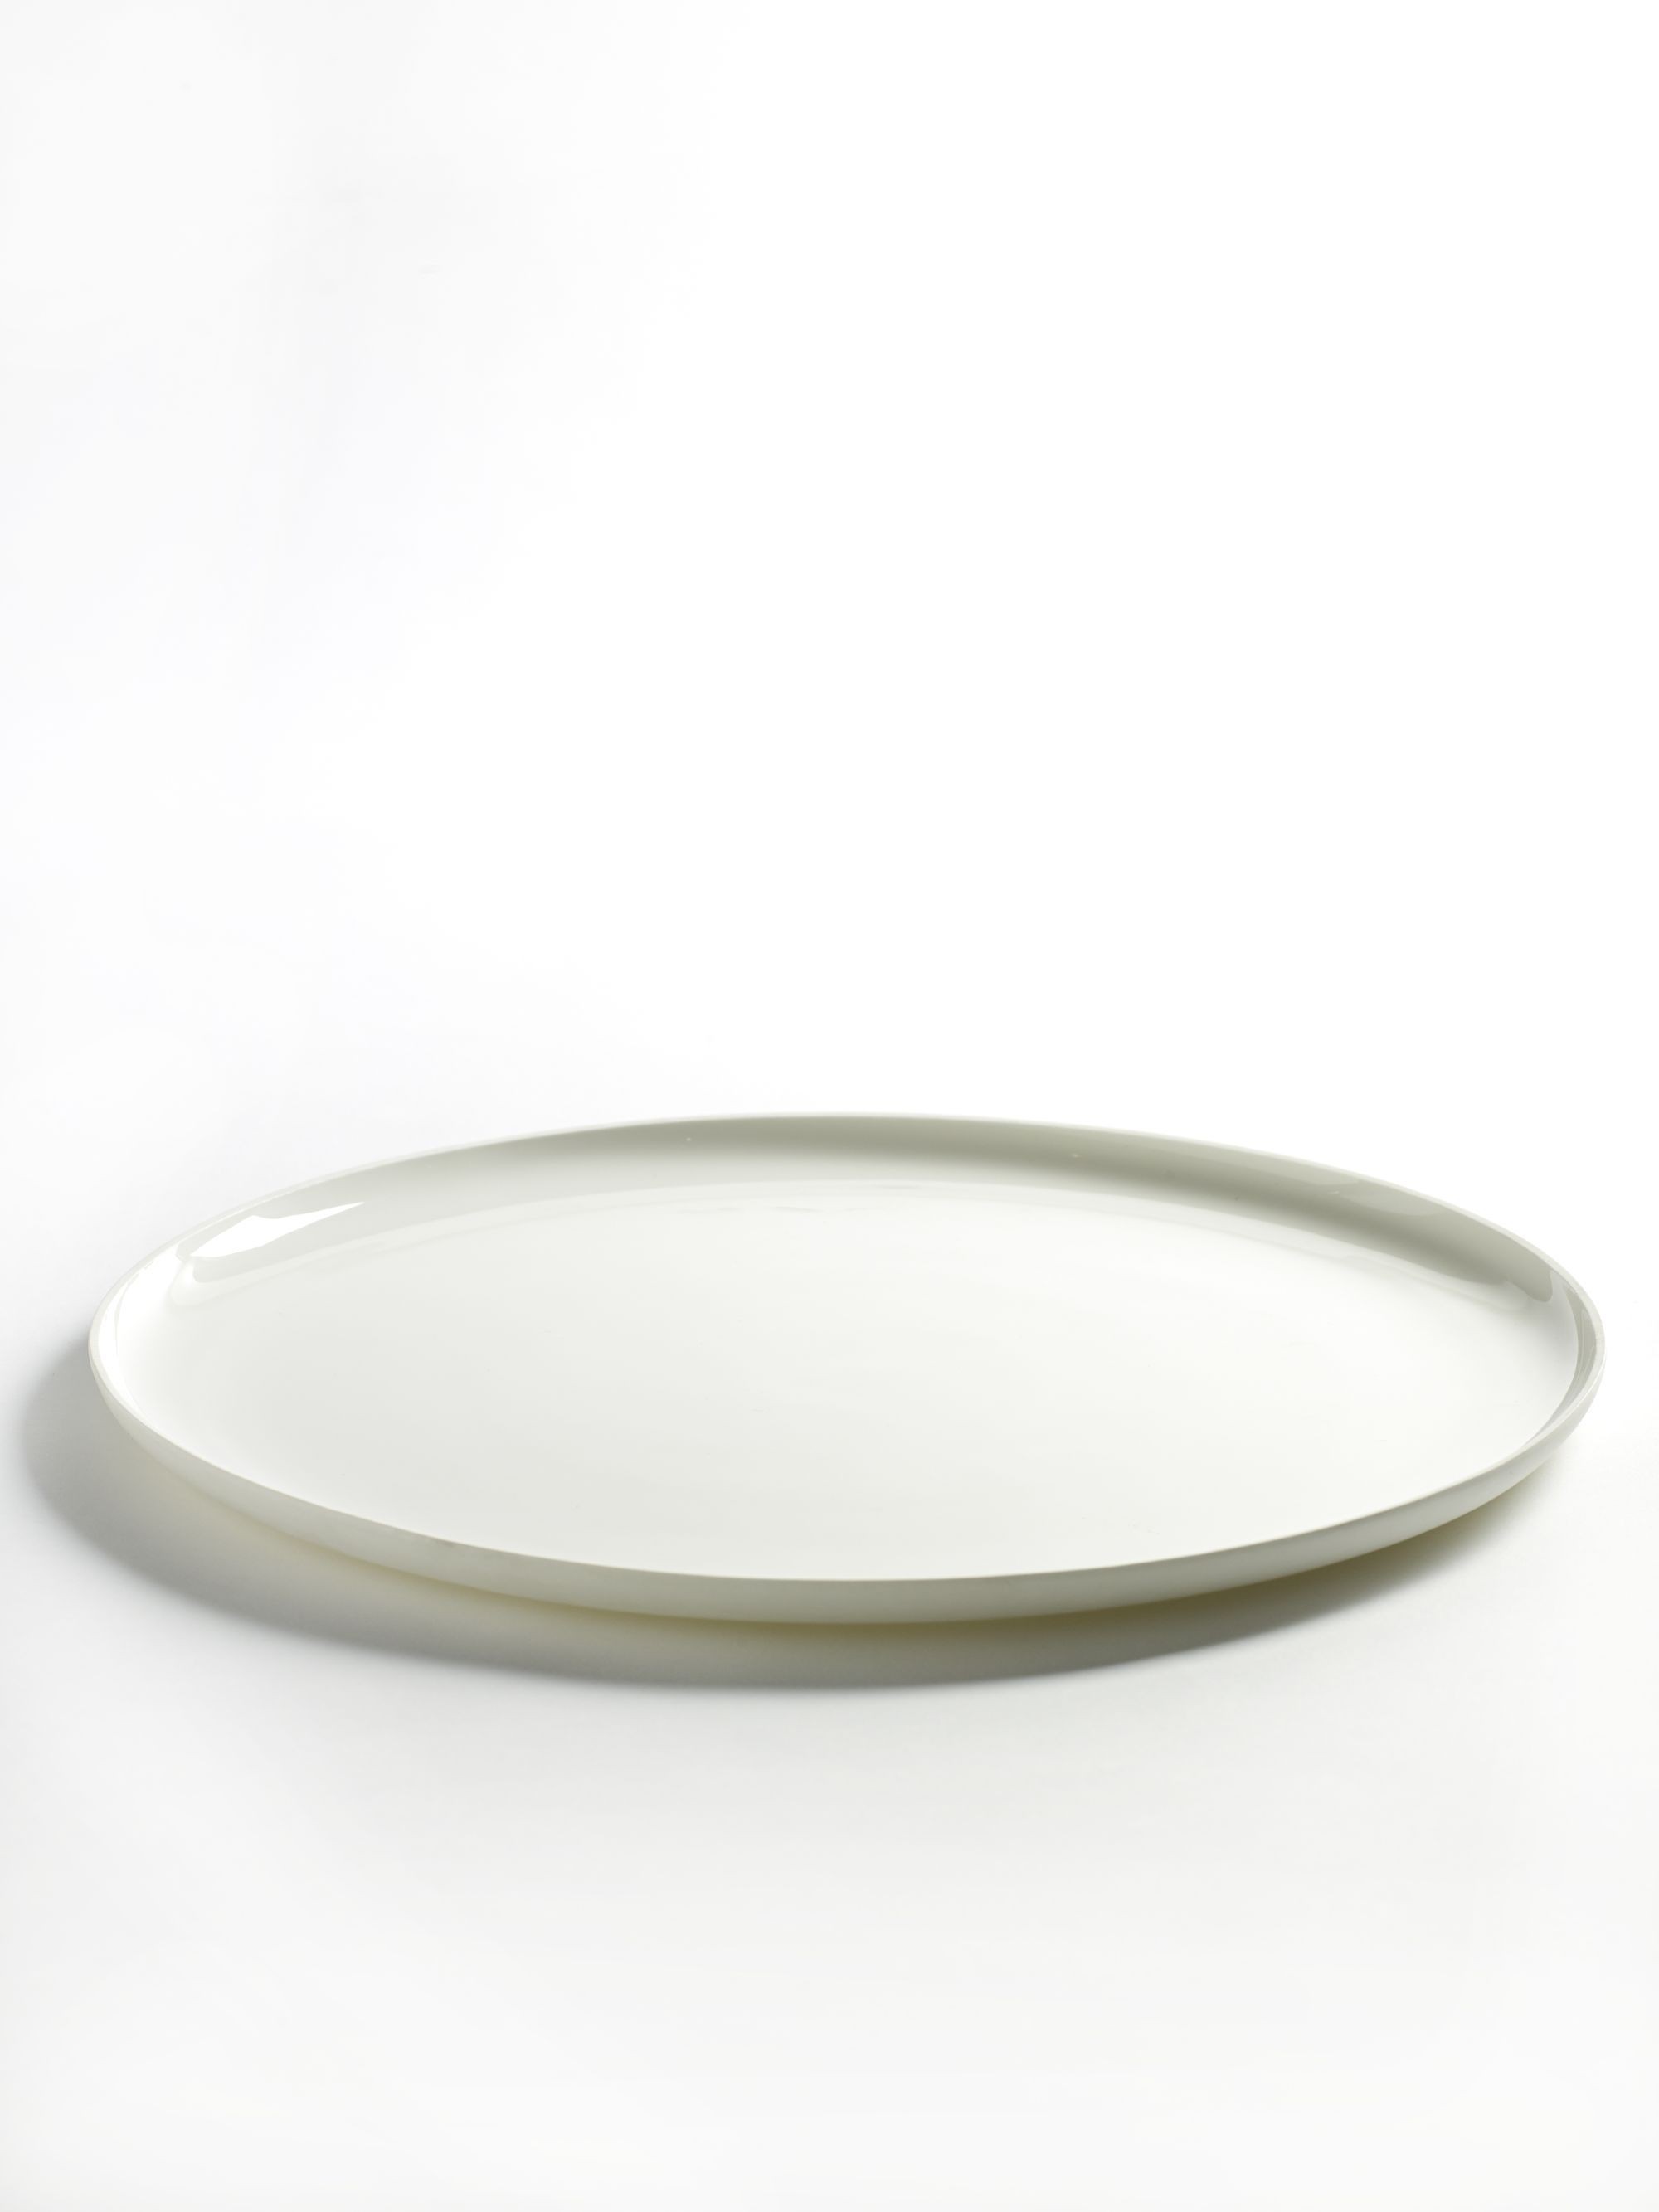 https://www.lilis.fr/10070/assiette-plate-blanche-xxl-diam-32-base-de-serax.jpg